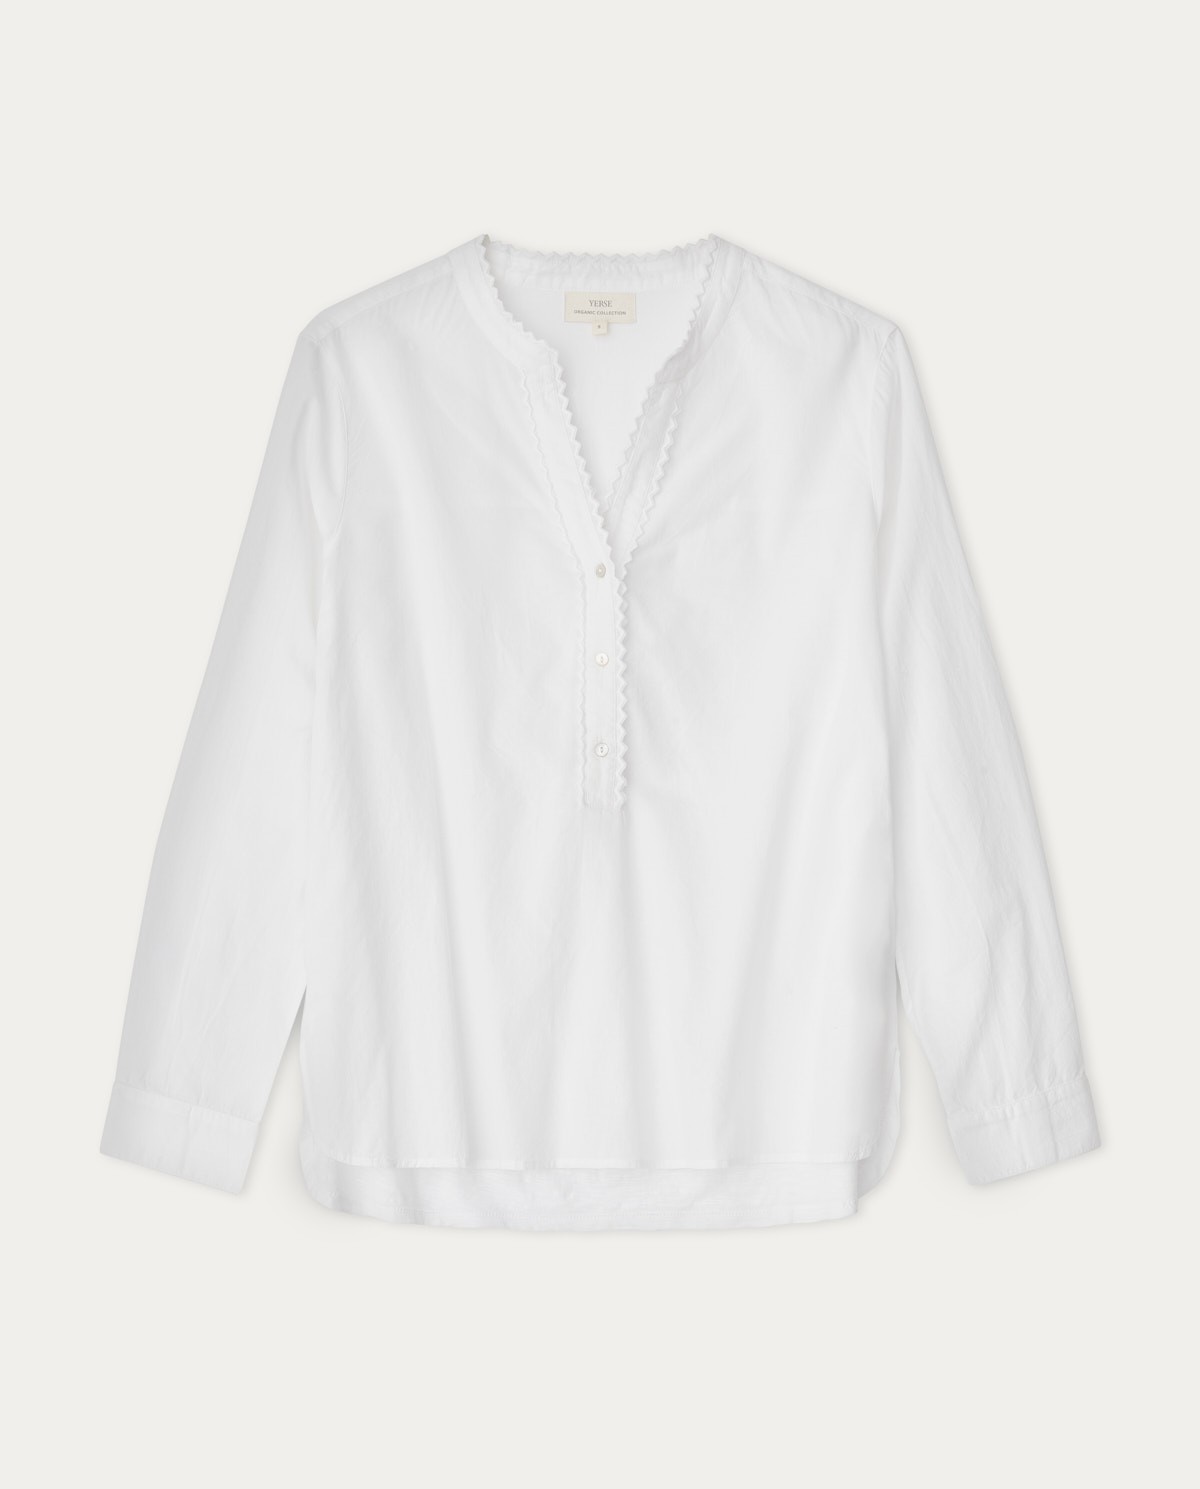 Cotton shirt embroidery White 5